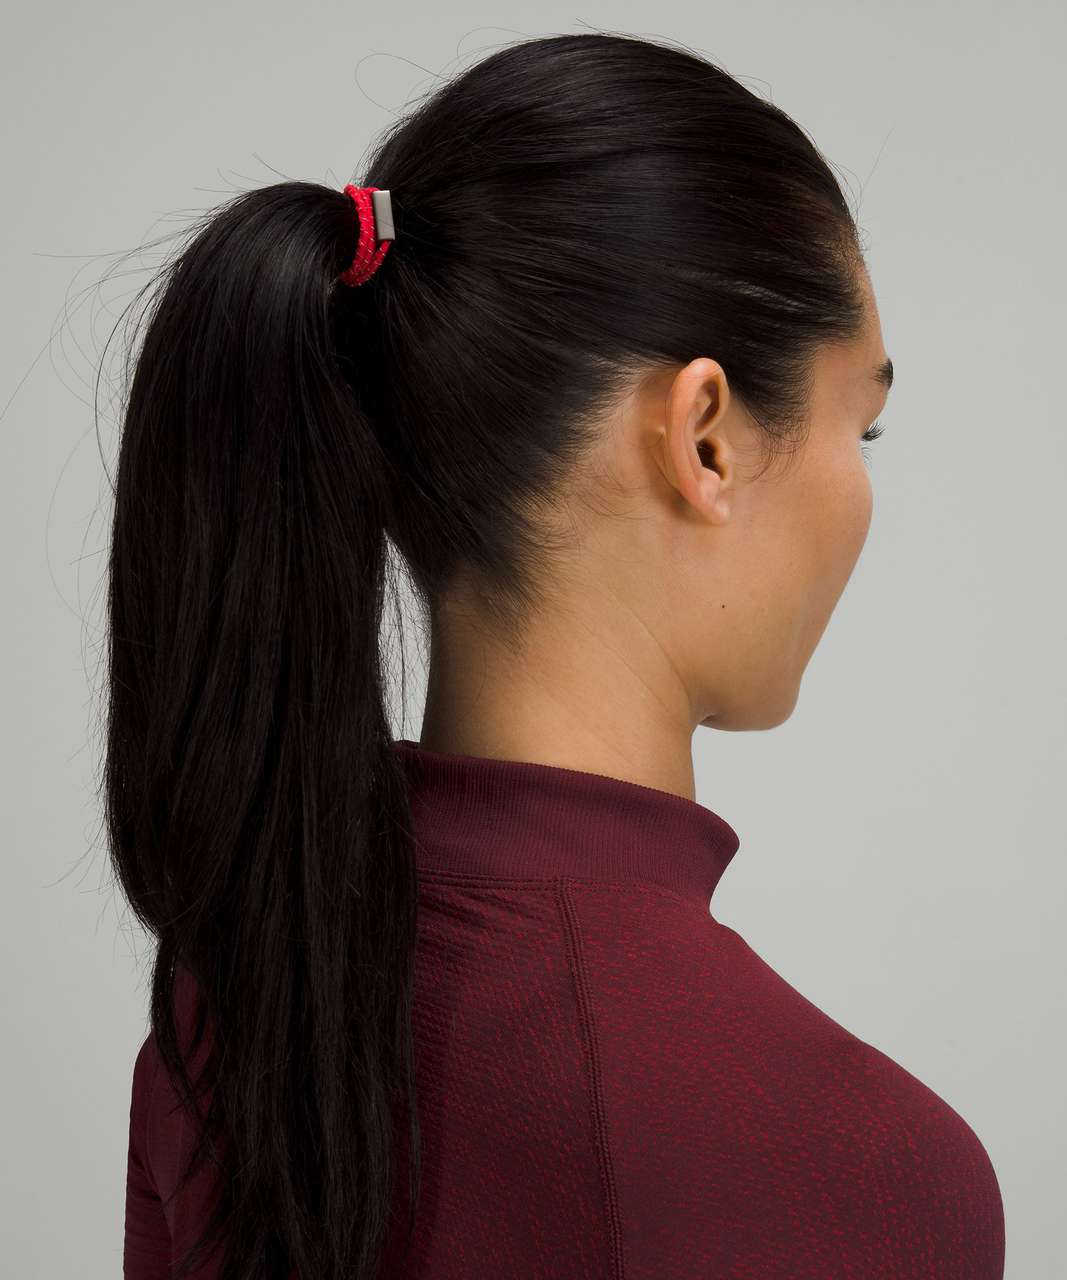 Lululemon Sleek and Strong Hair Ties 3 Pack - Red Merlot / Sport Red / Carnation Red